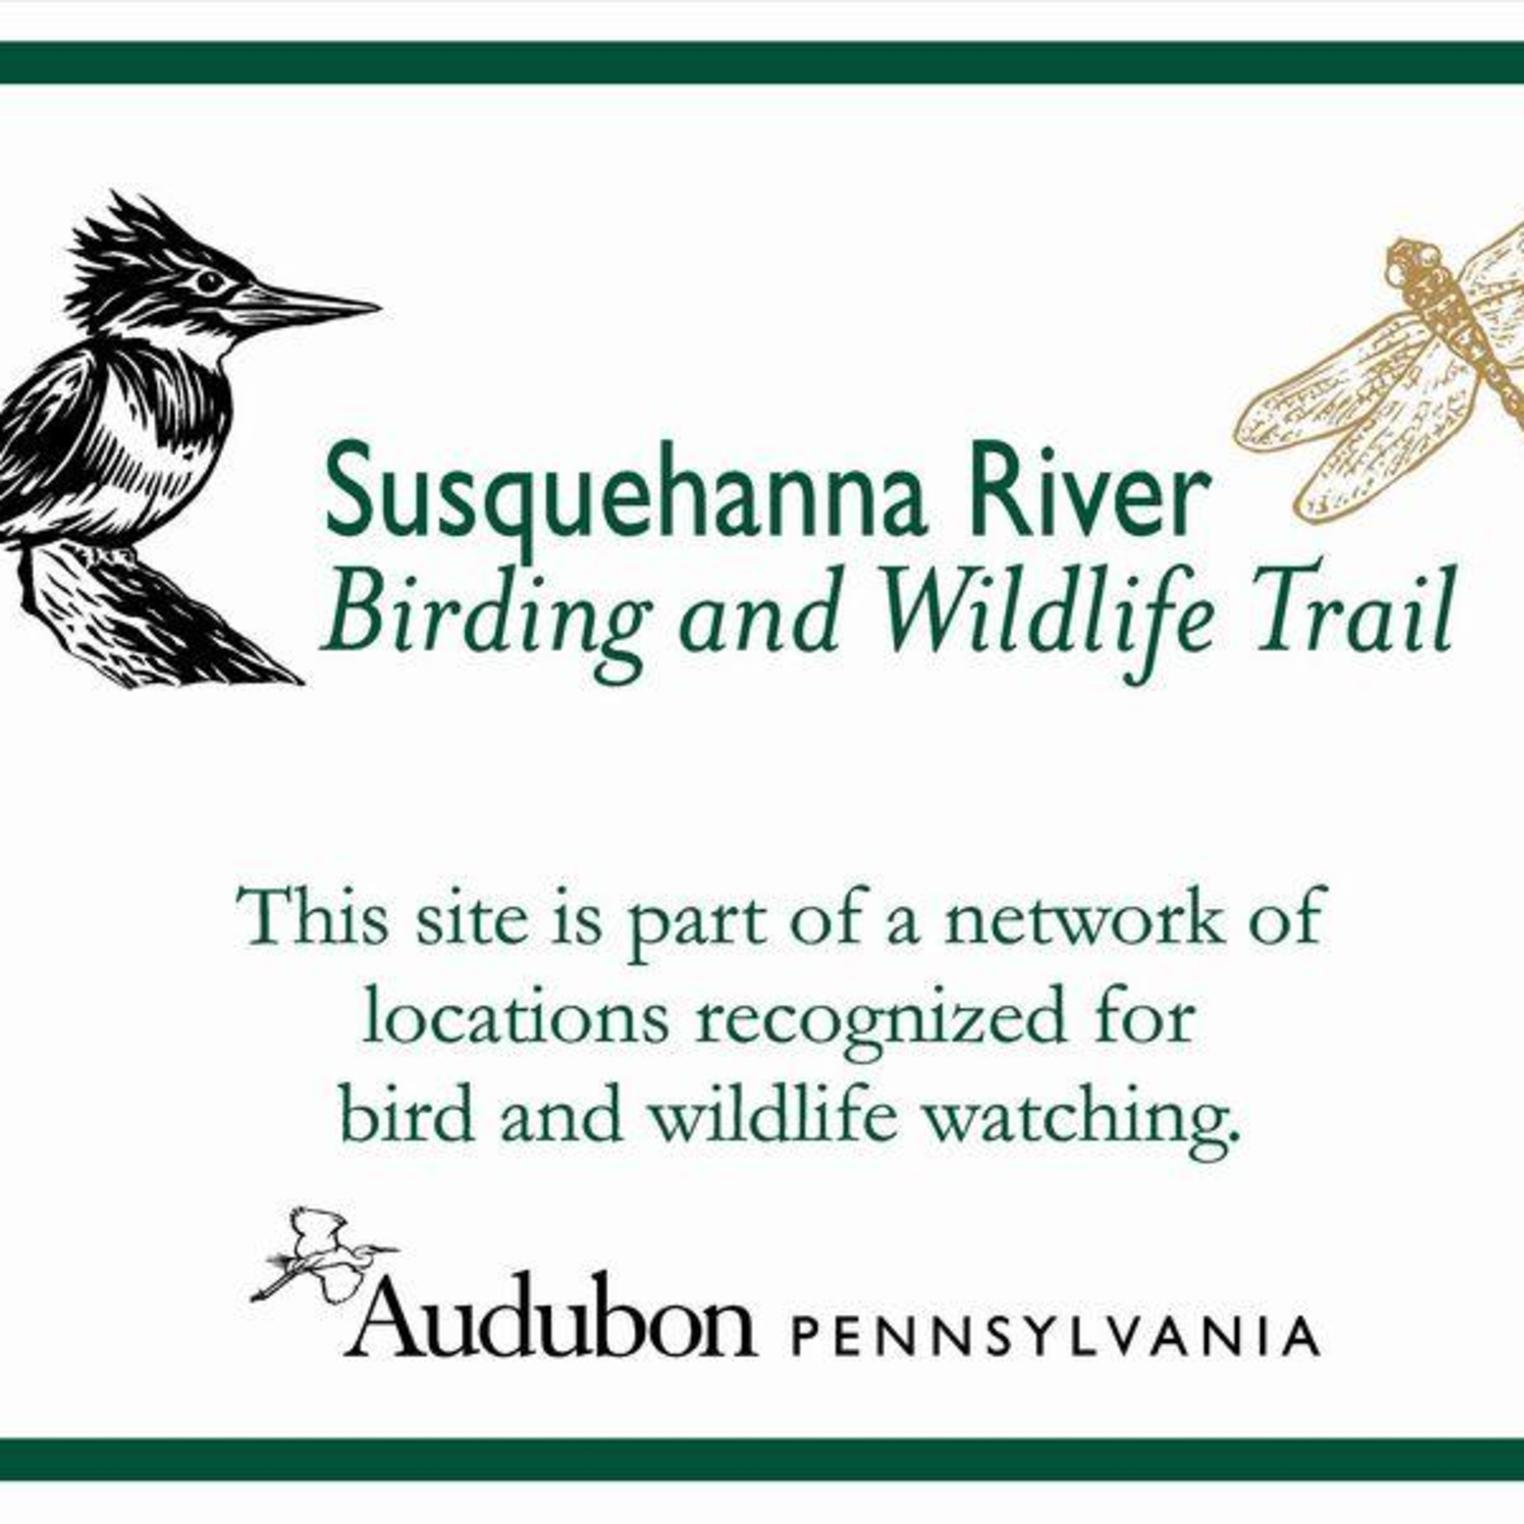 Susquehanna River Birding and Wildlife Trail